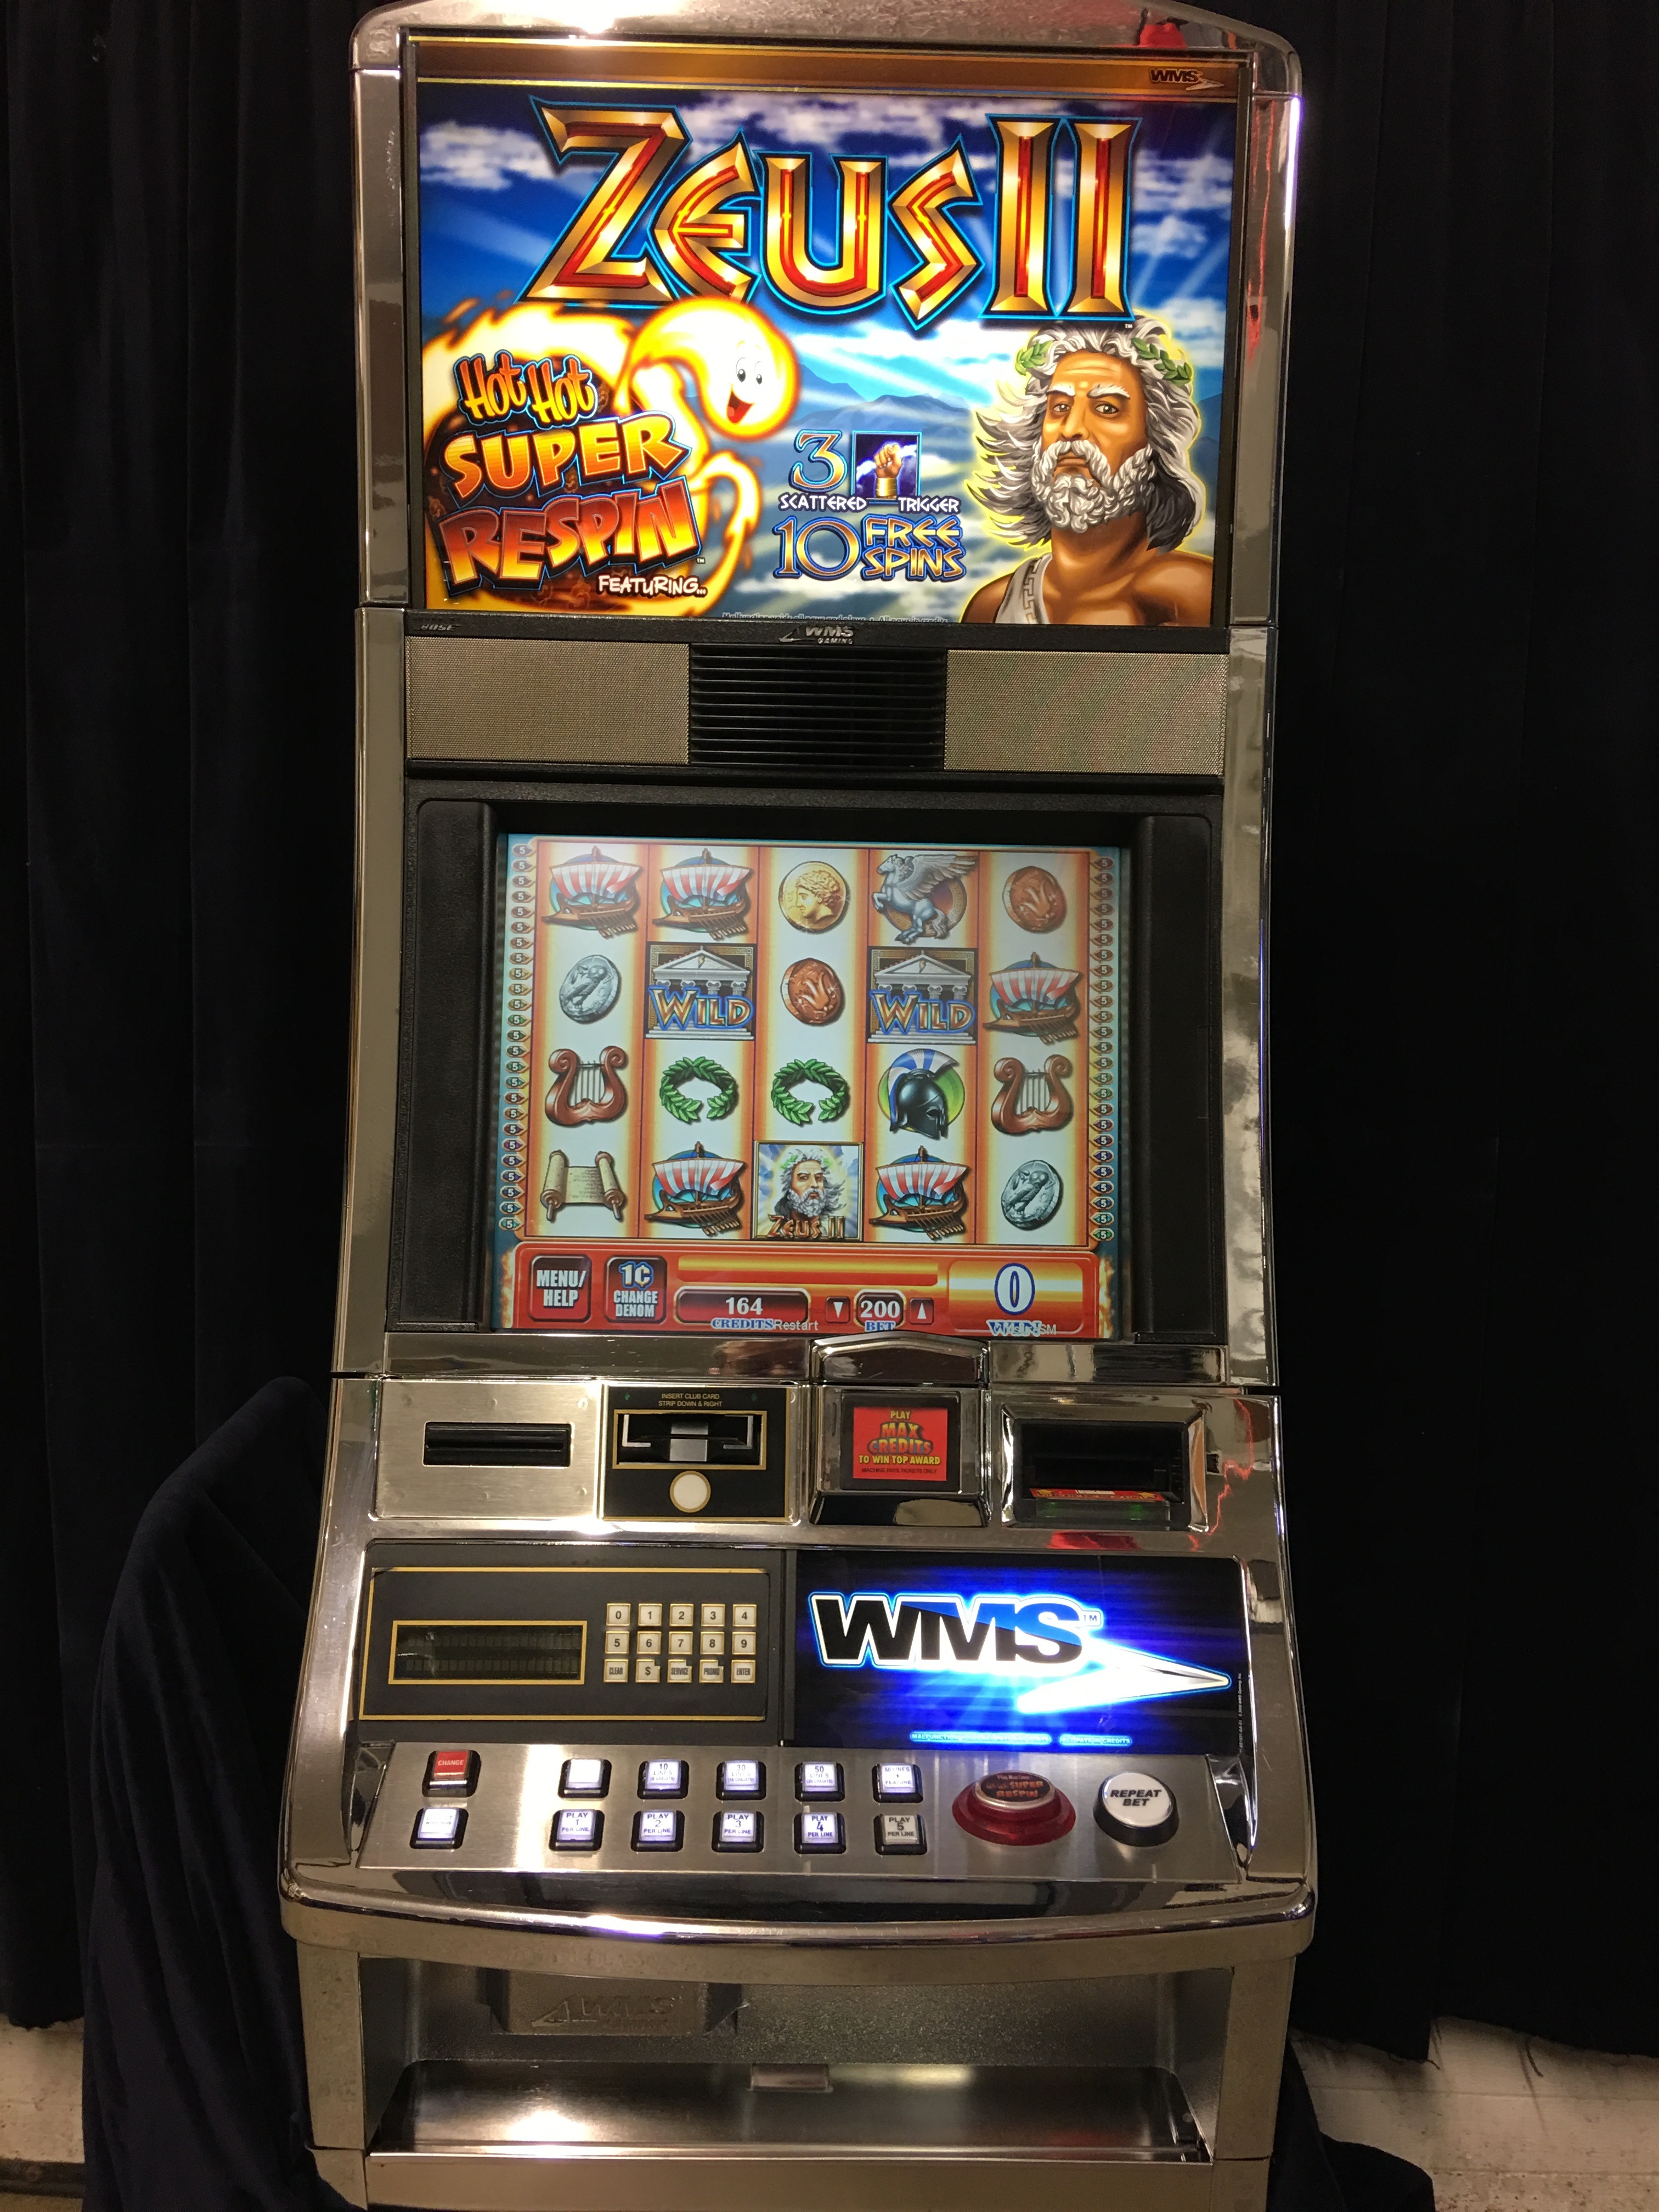 zeus 2 slot machine pc torrent